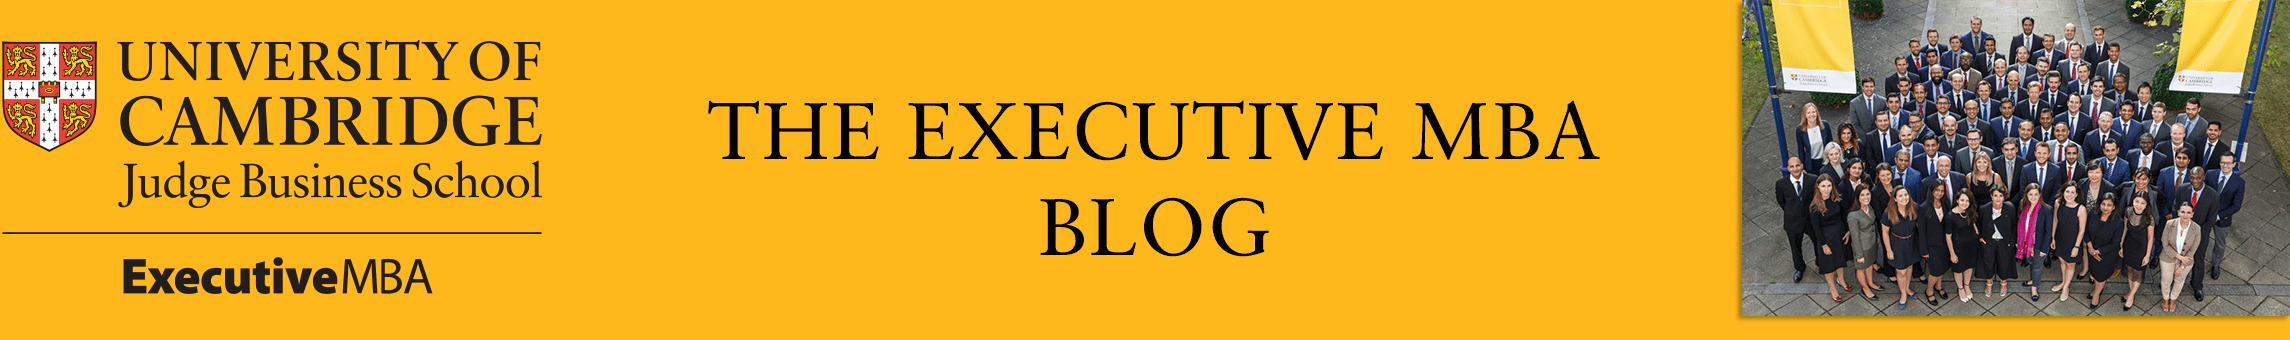 The Executive MBA blog.